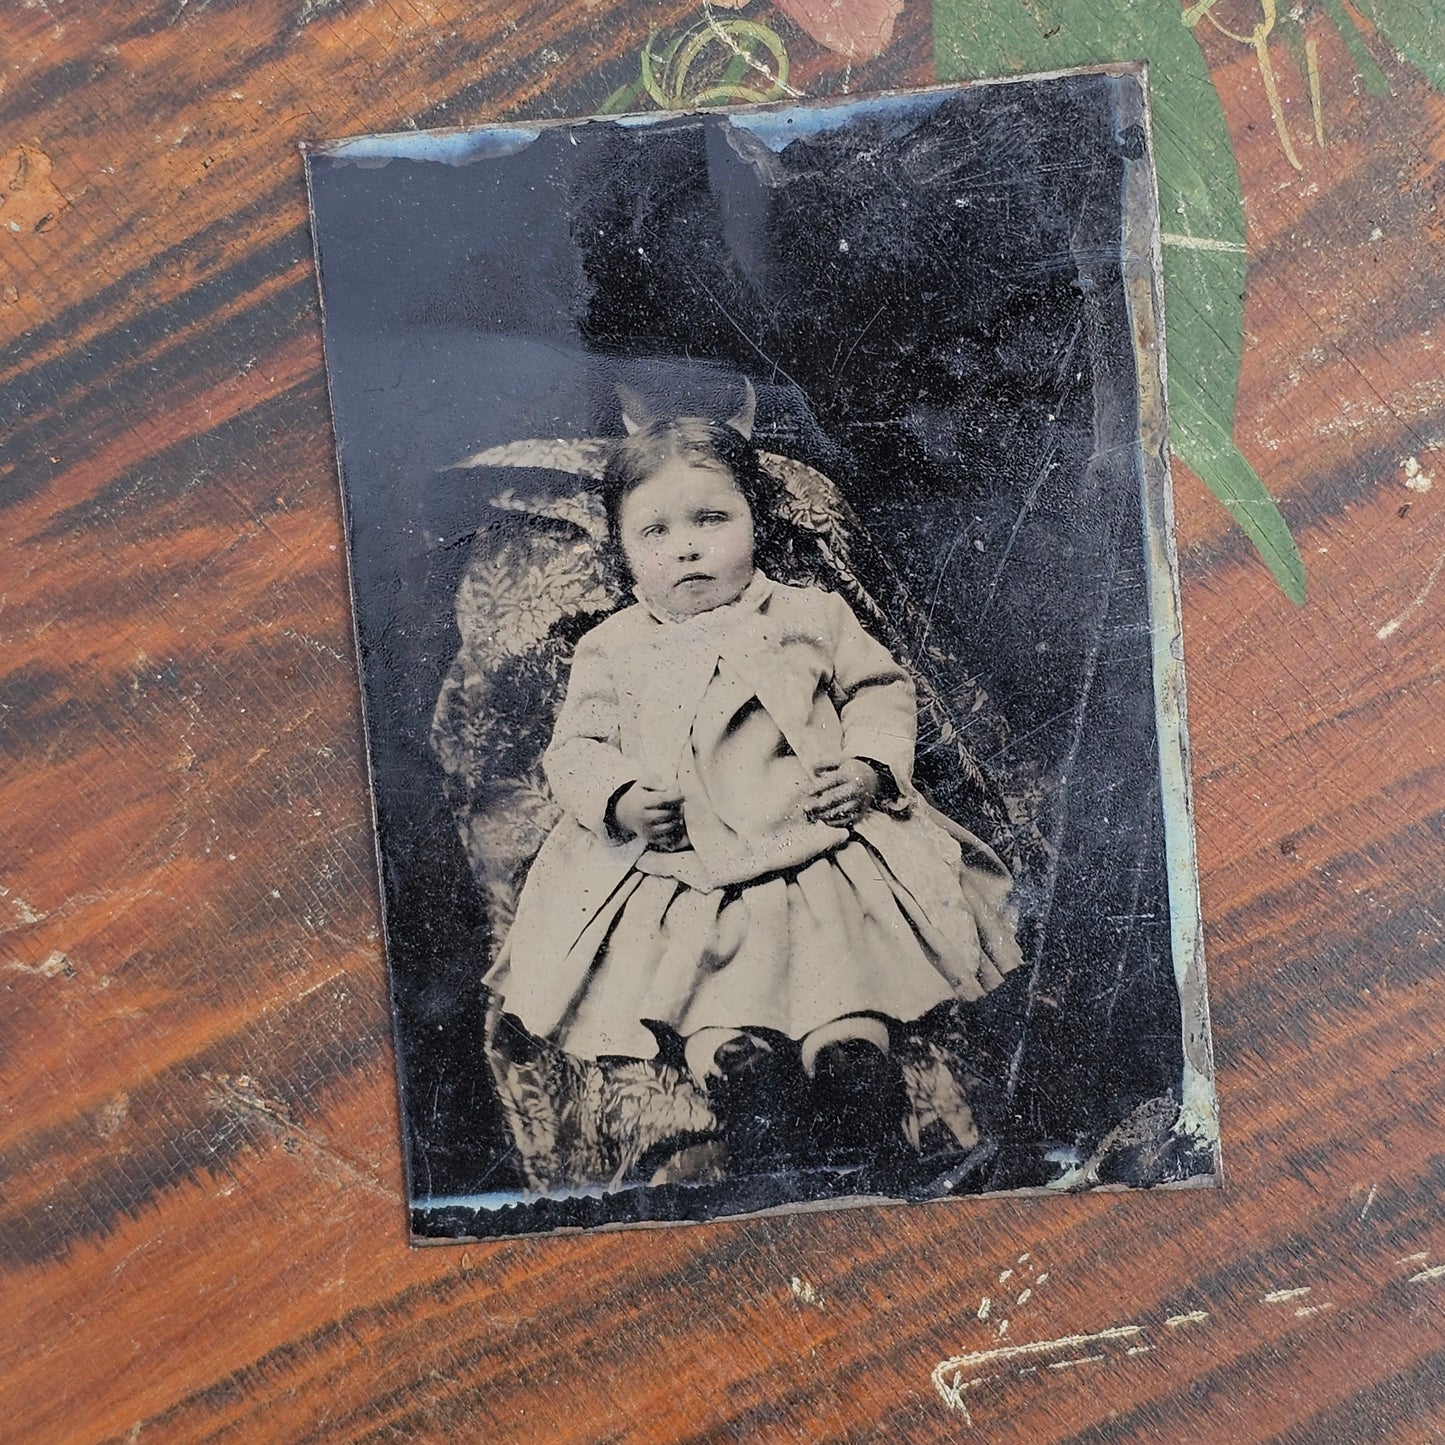 Hidden mother tintype photograph identified as Lillie Wilkinson